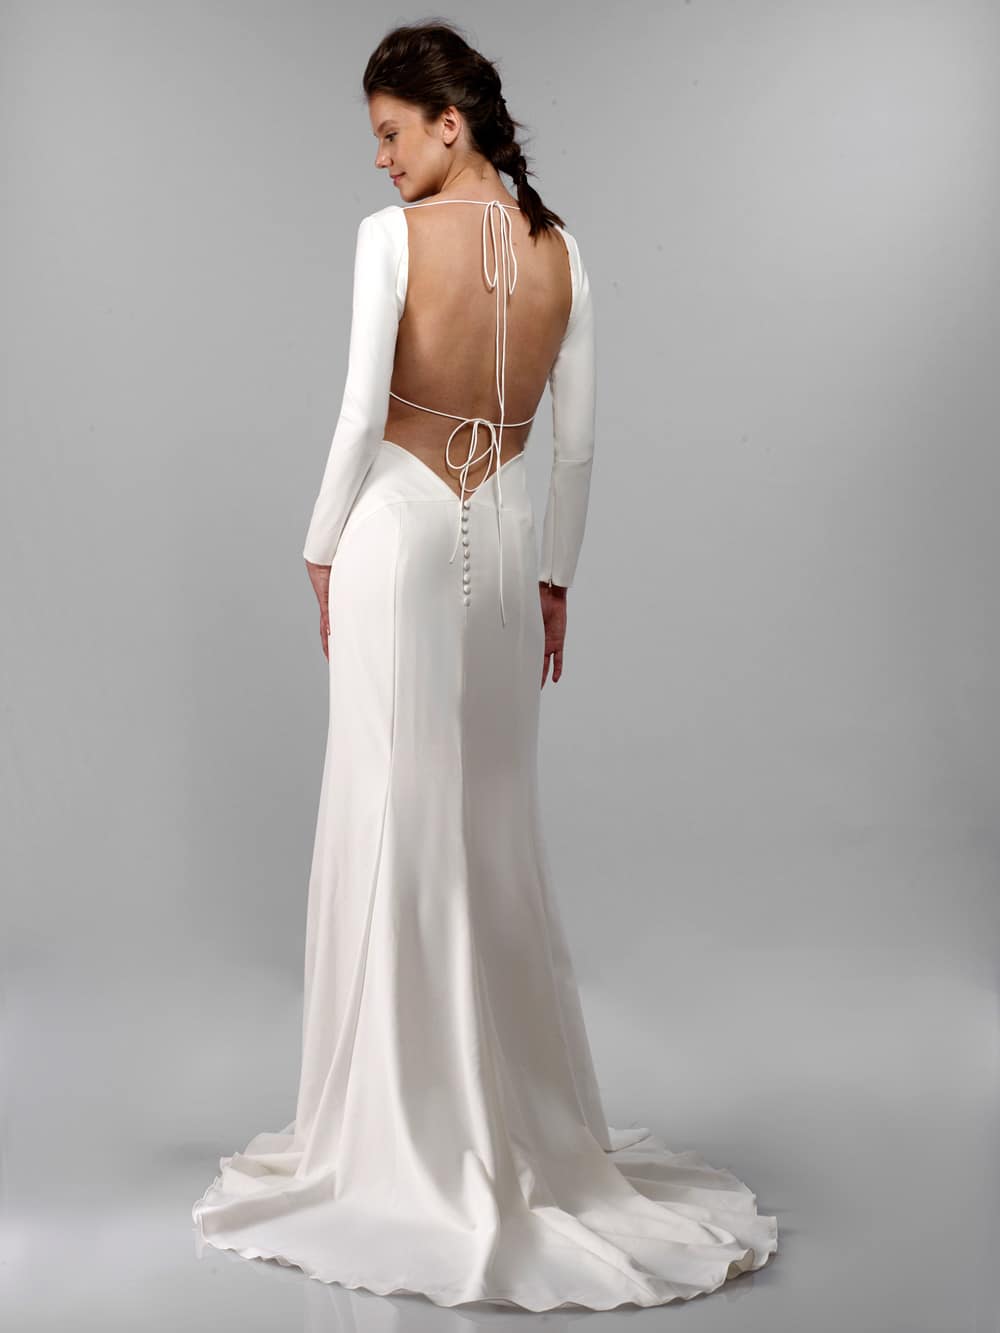 Antonio Gual 'Killian' size 2 new wedding dress back view on model